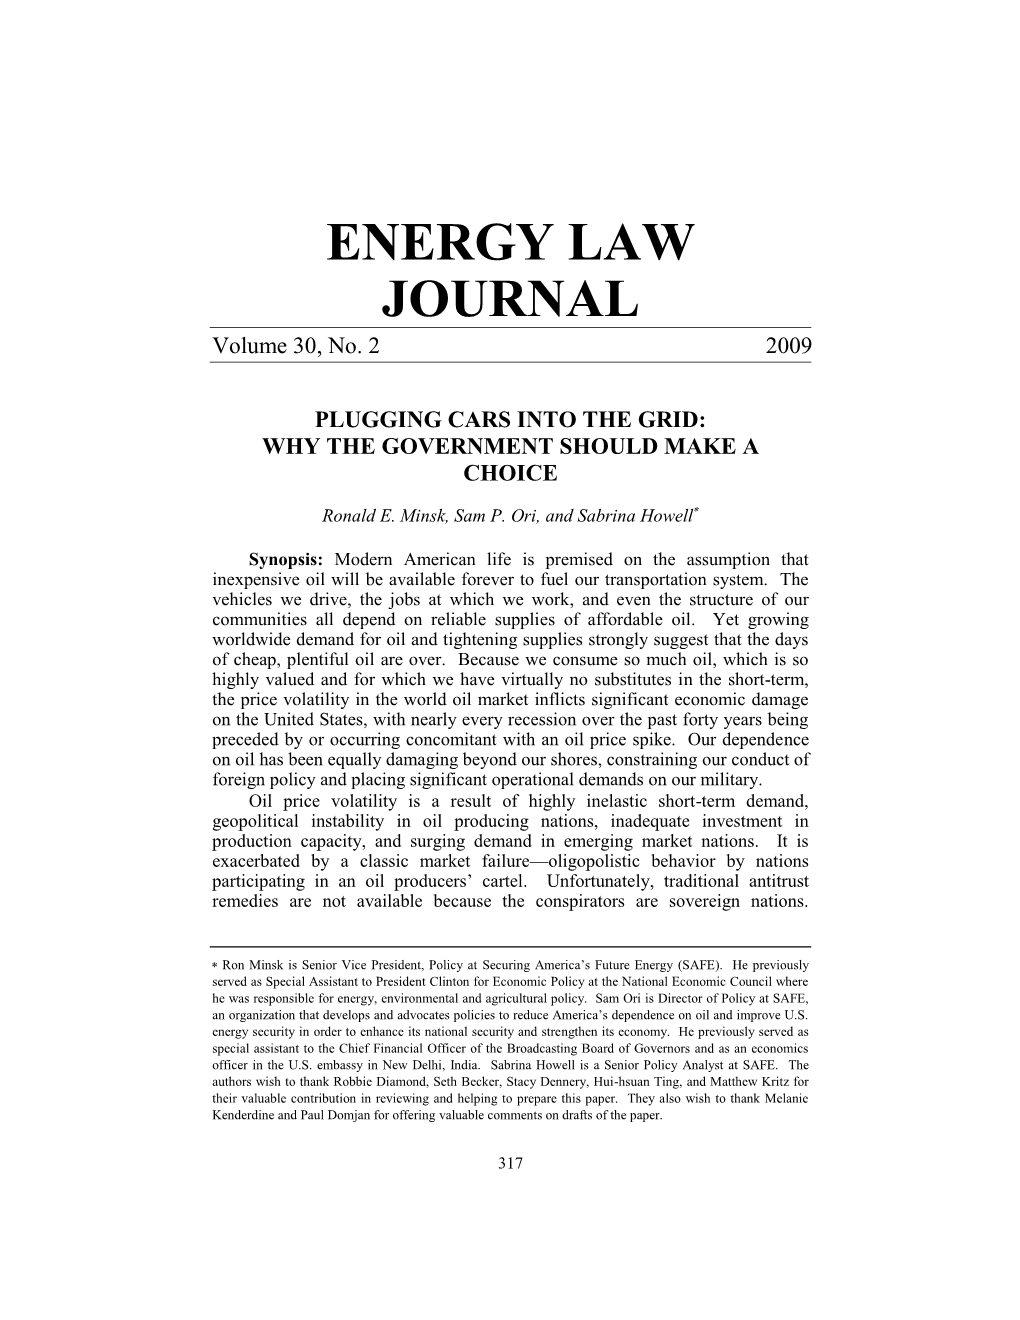 ENERGY LAW JOURNAL Volume 30, No